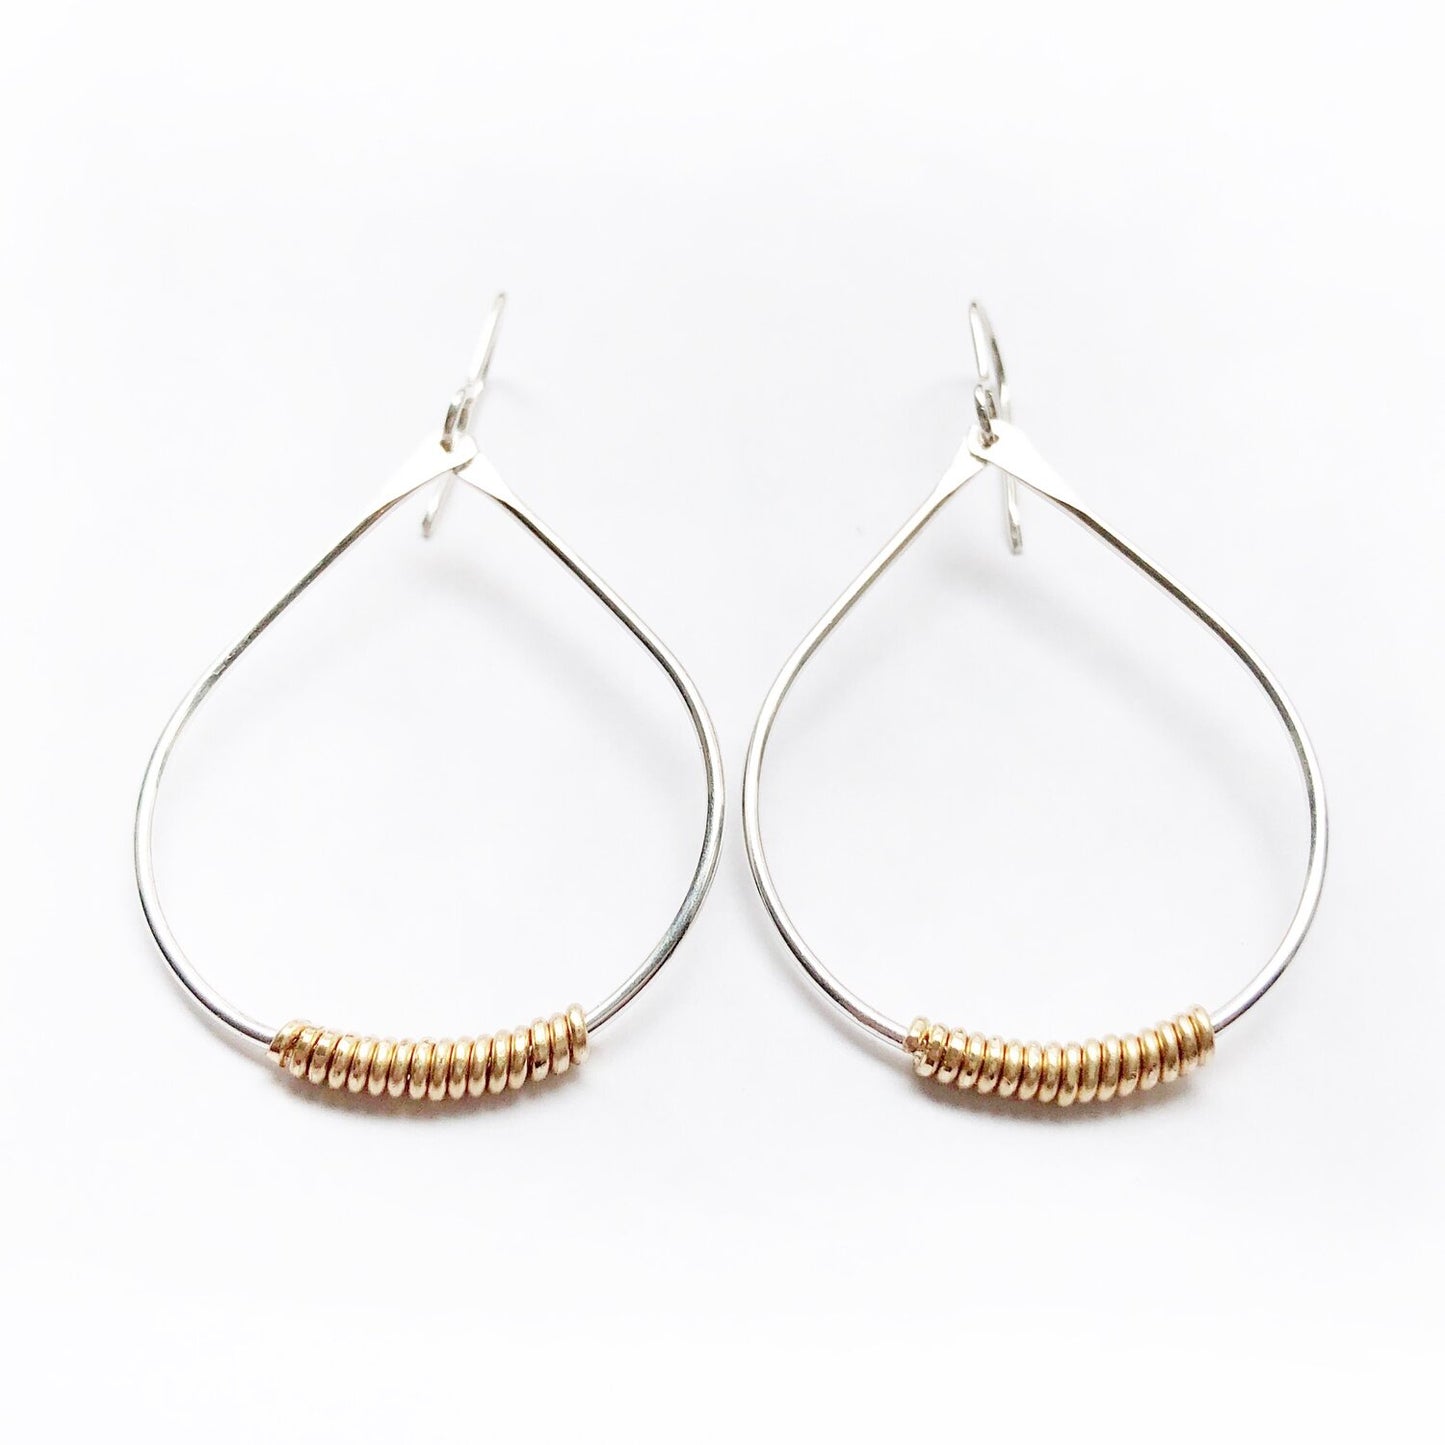 Teardrop With Gold Wirewrap (Wire or Post) Sterling Silver Earrings by Cullen Jewelry Design